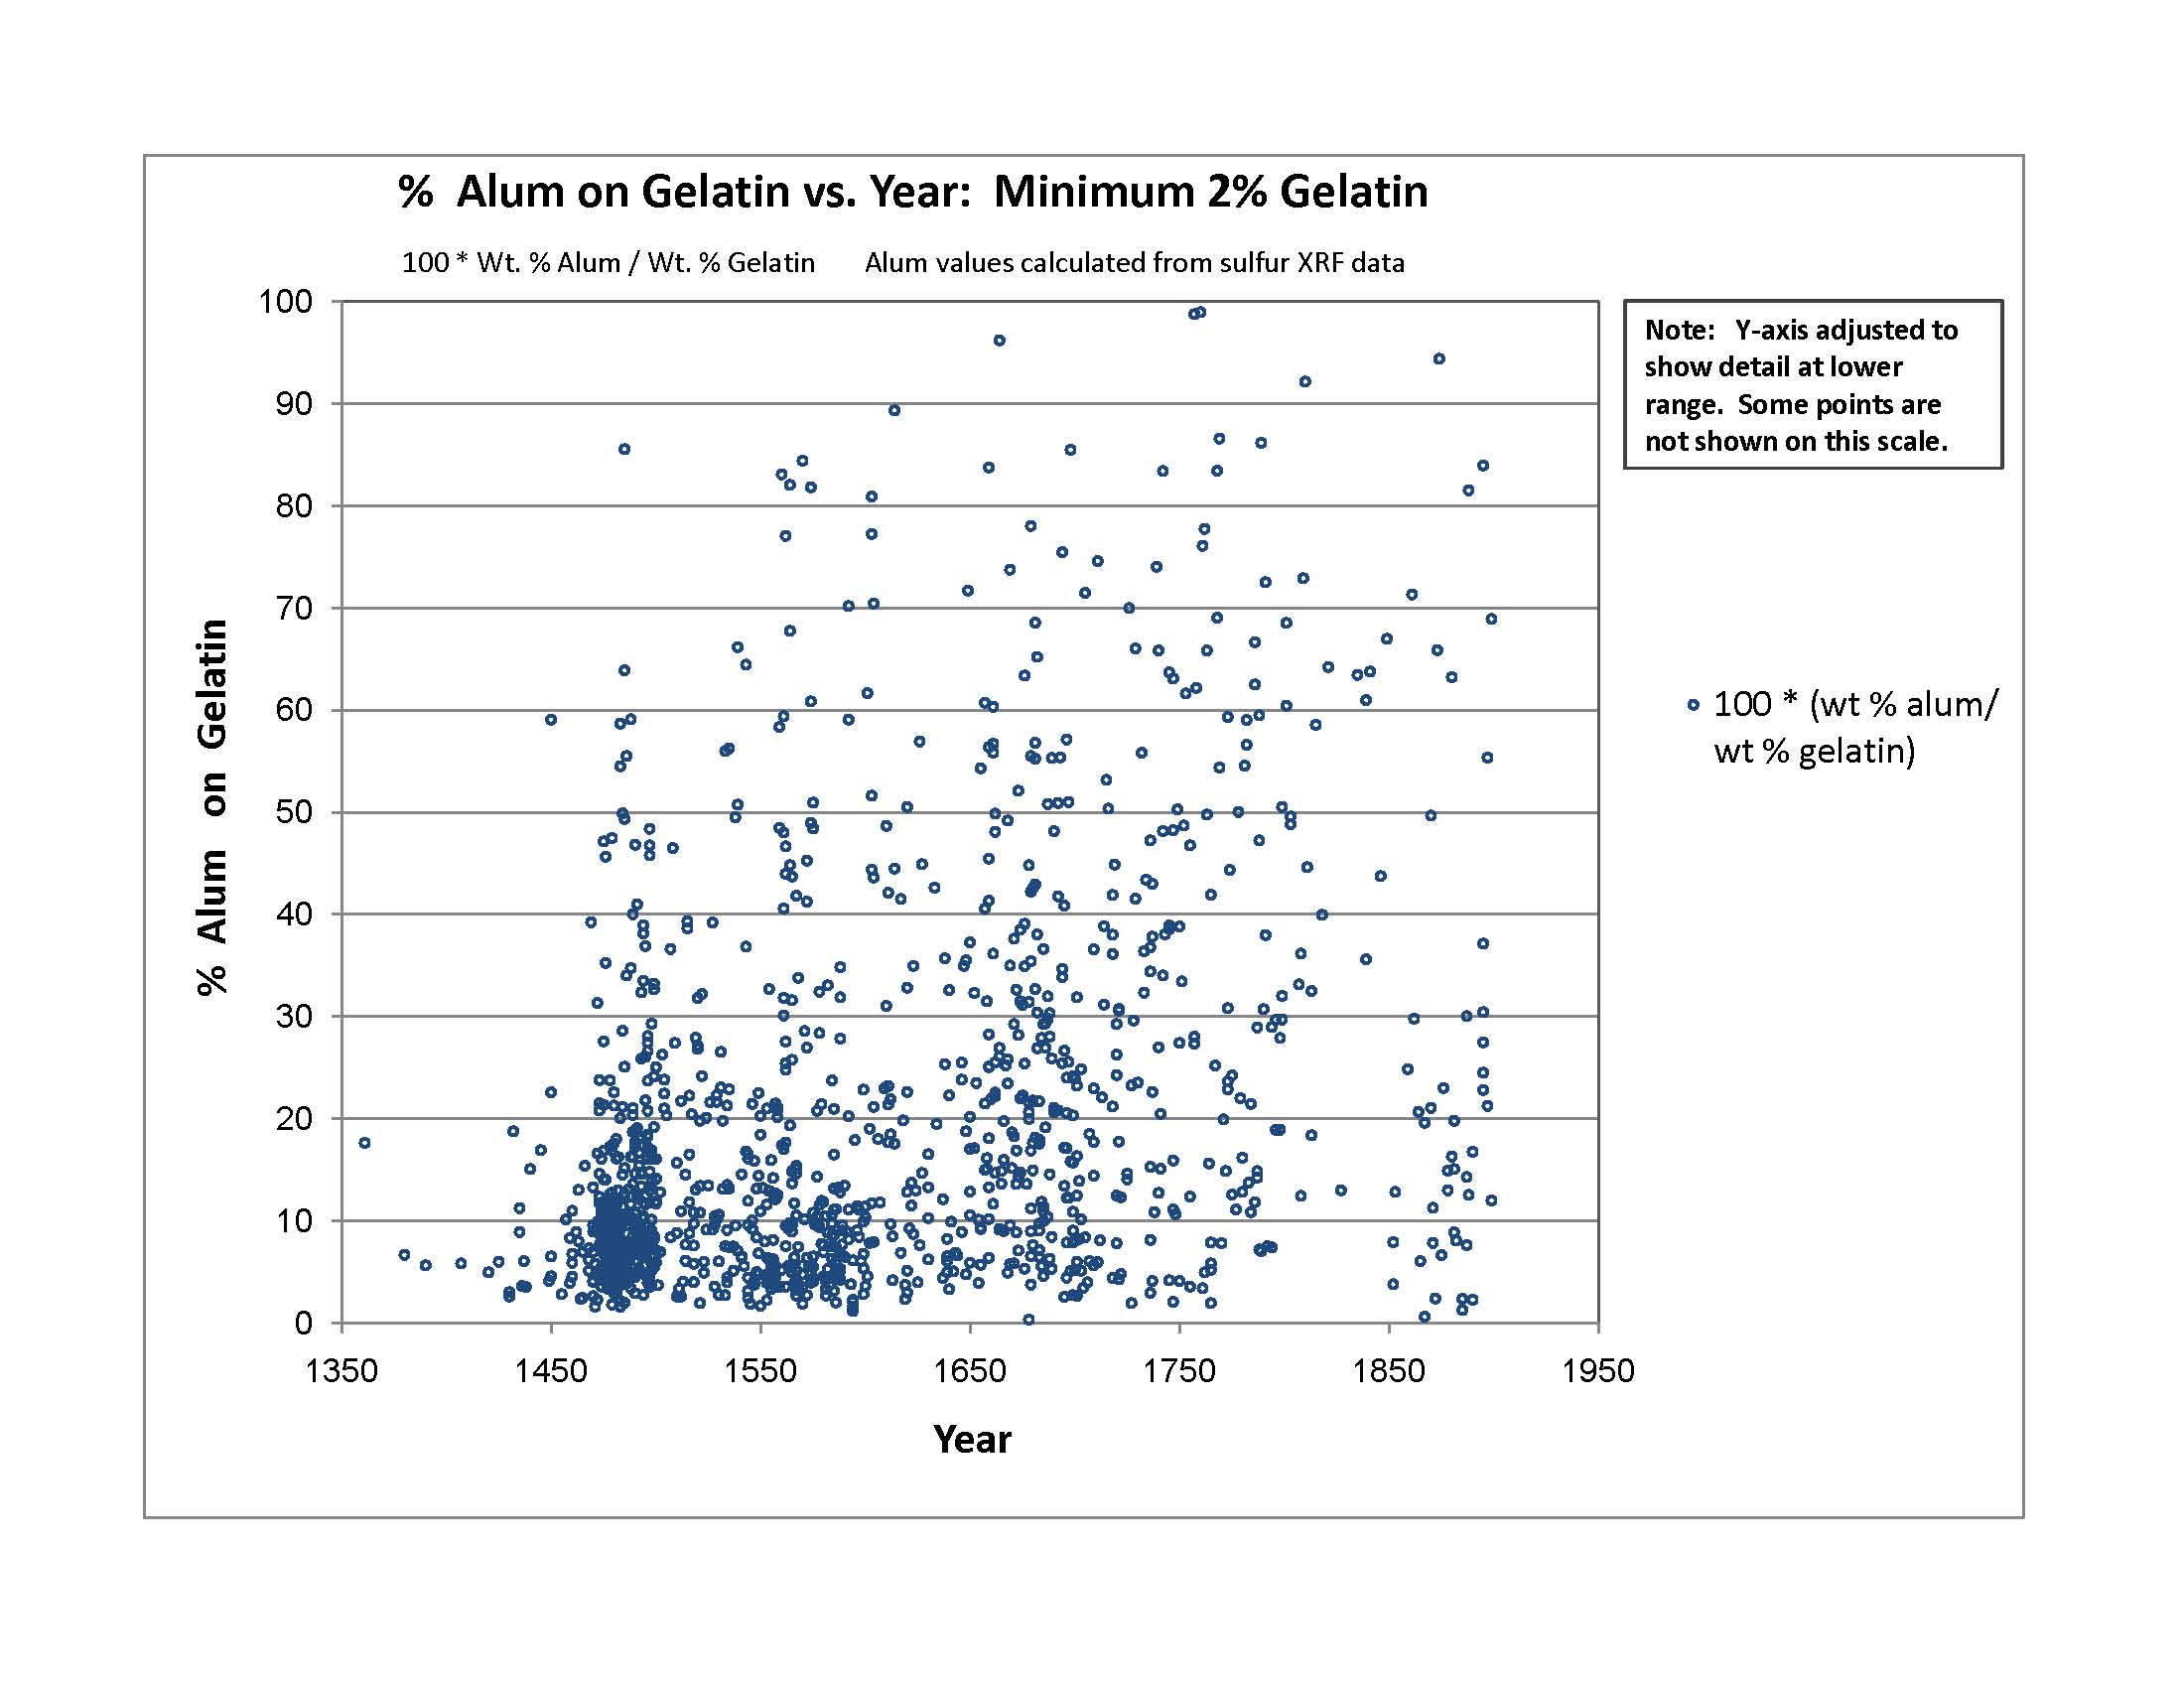 Plot 15a: % Alum on Gelatin, zoom